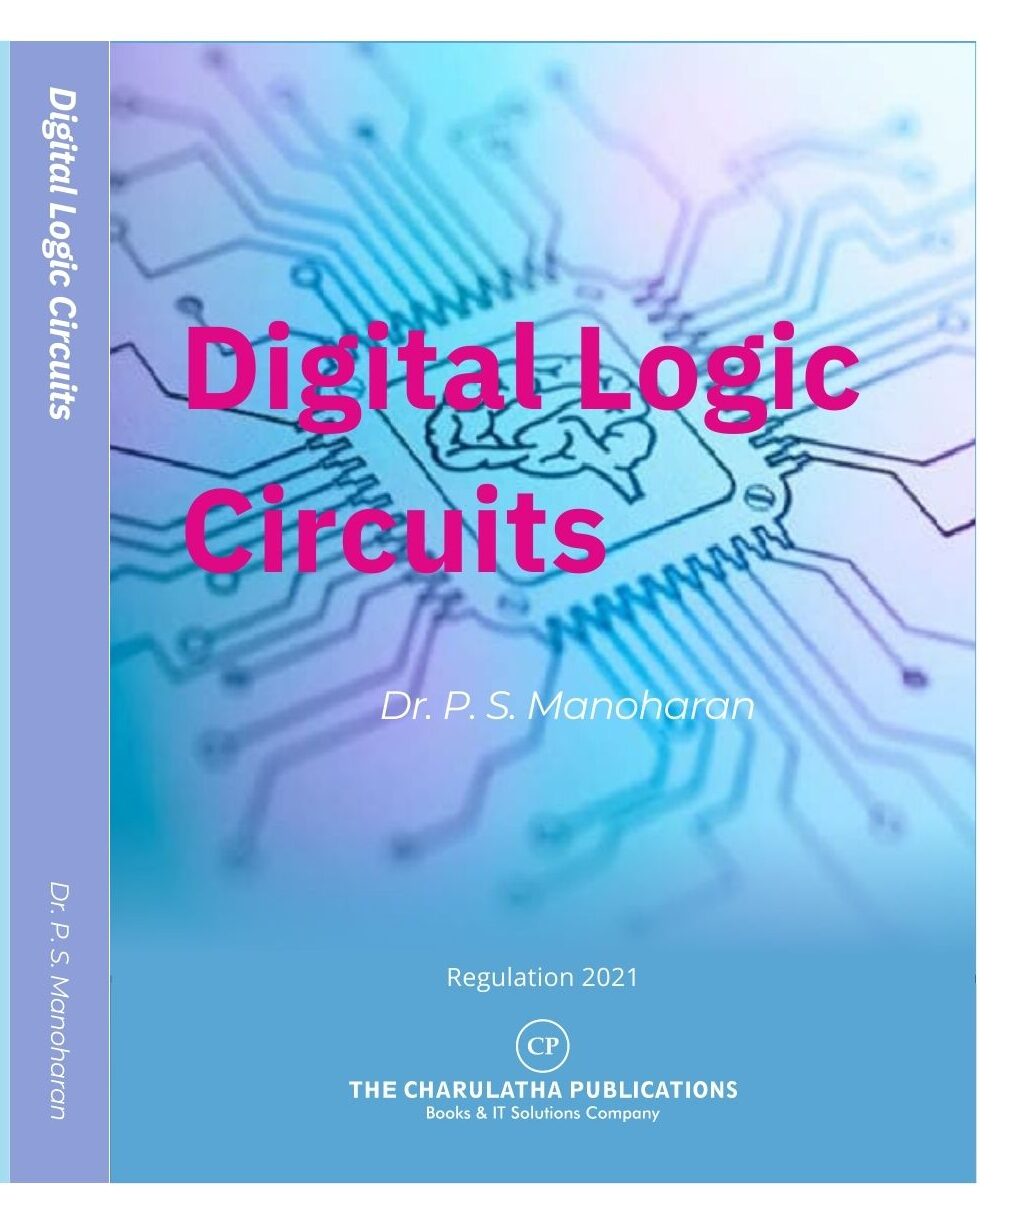 The charulatha publications Digital logic circuits